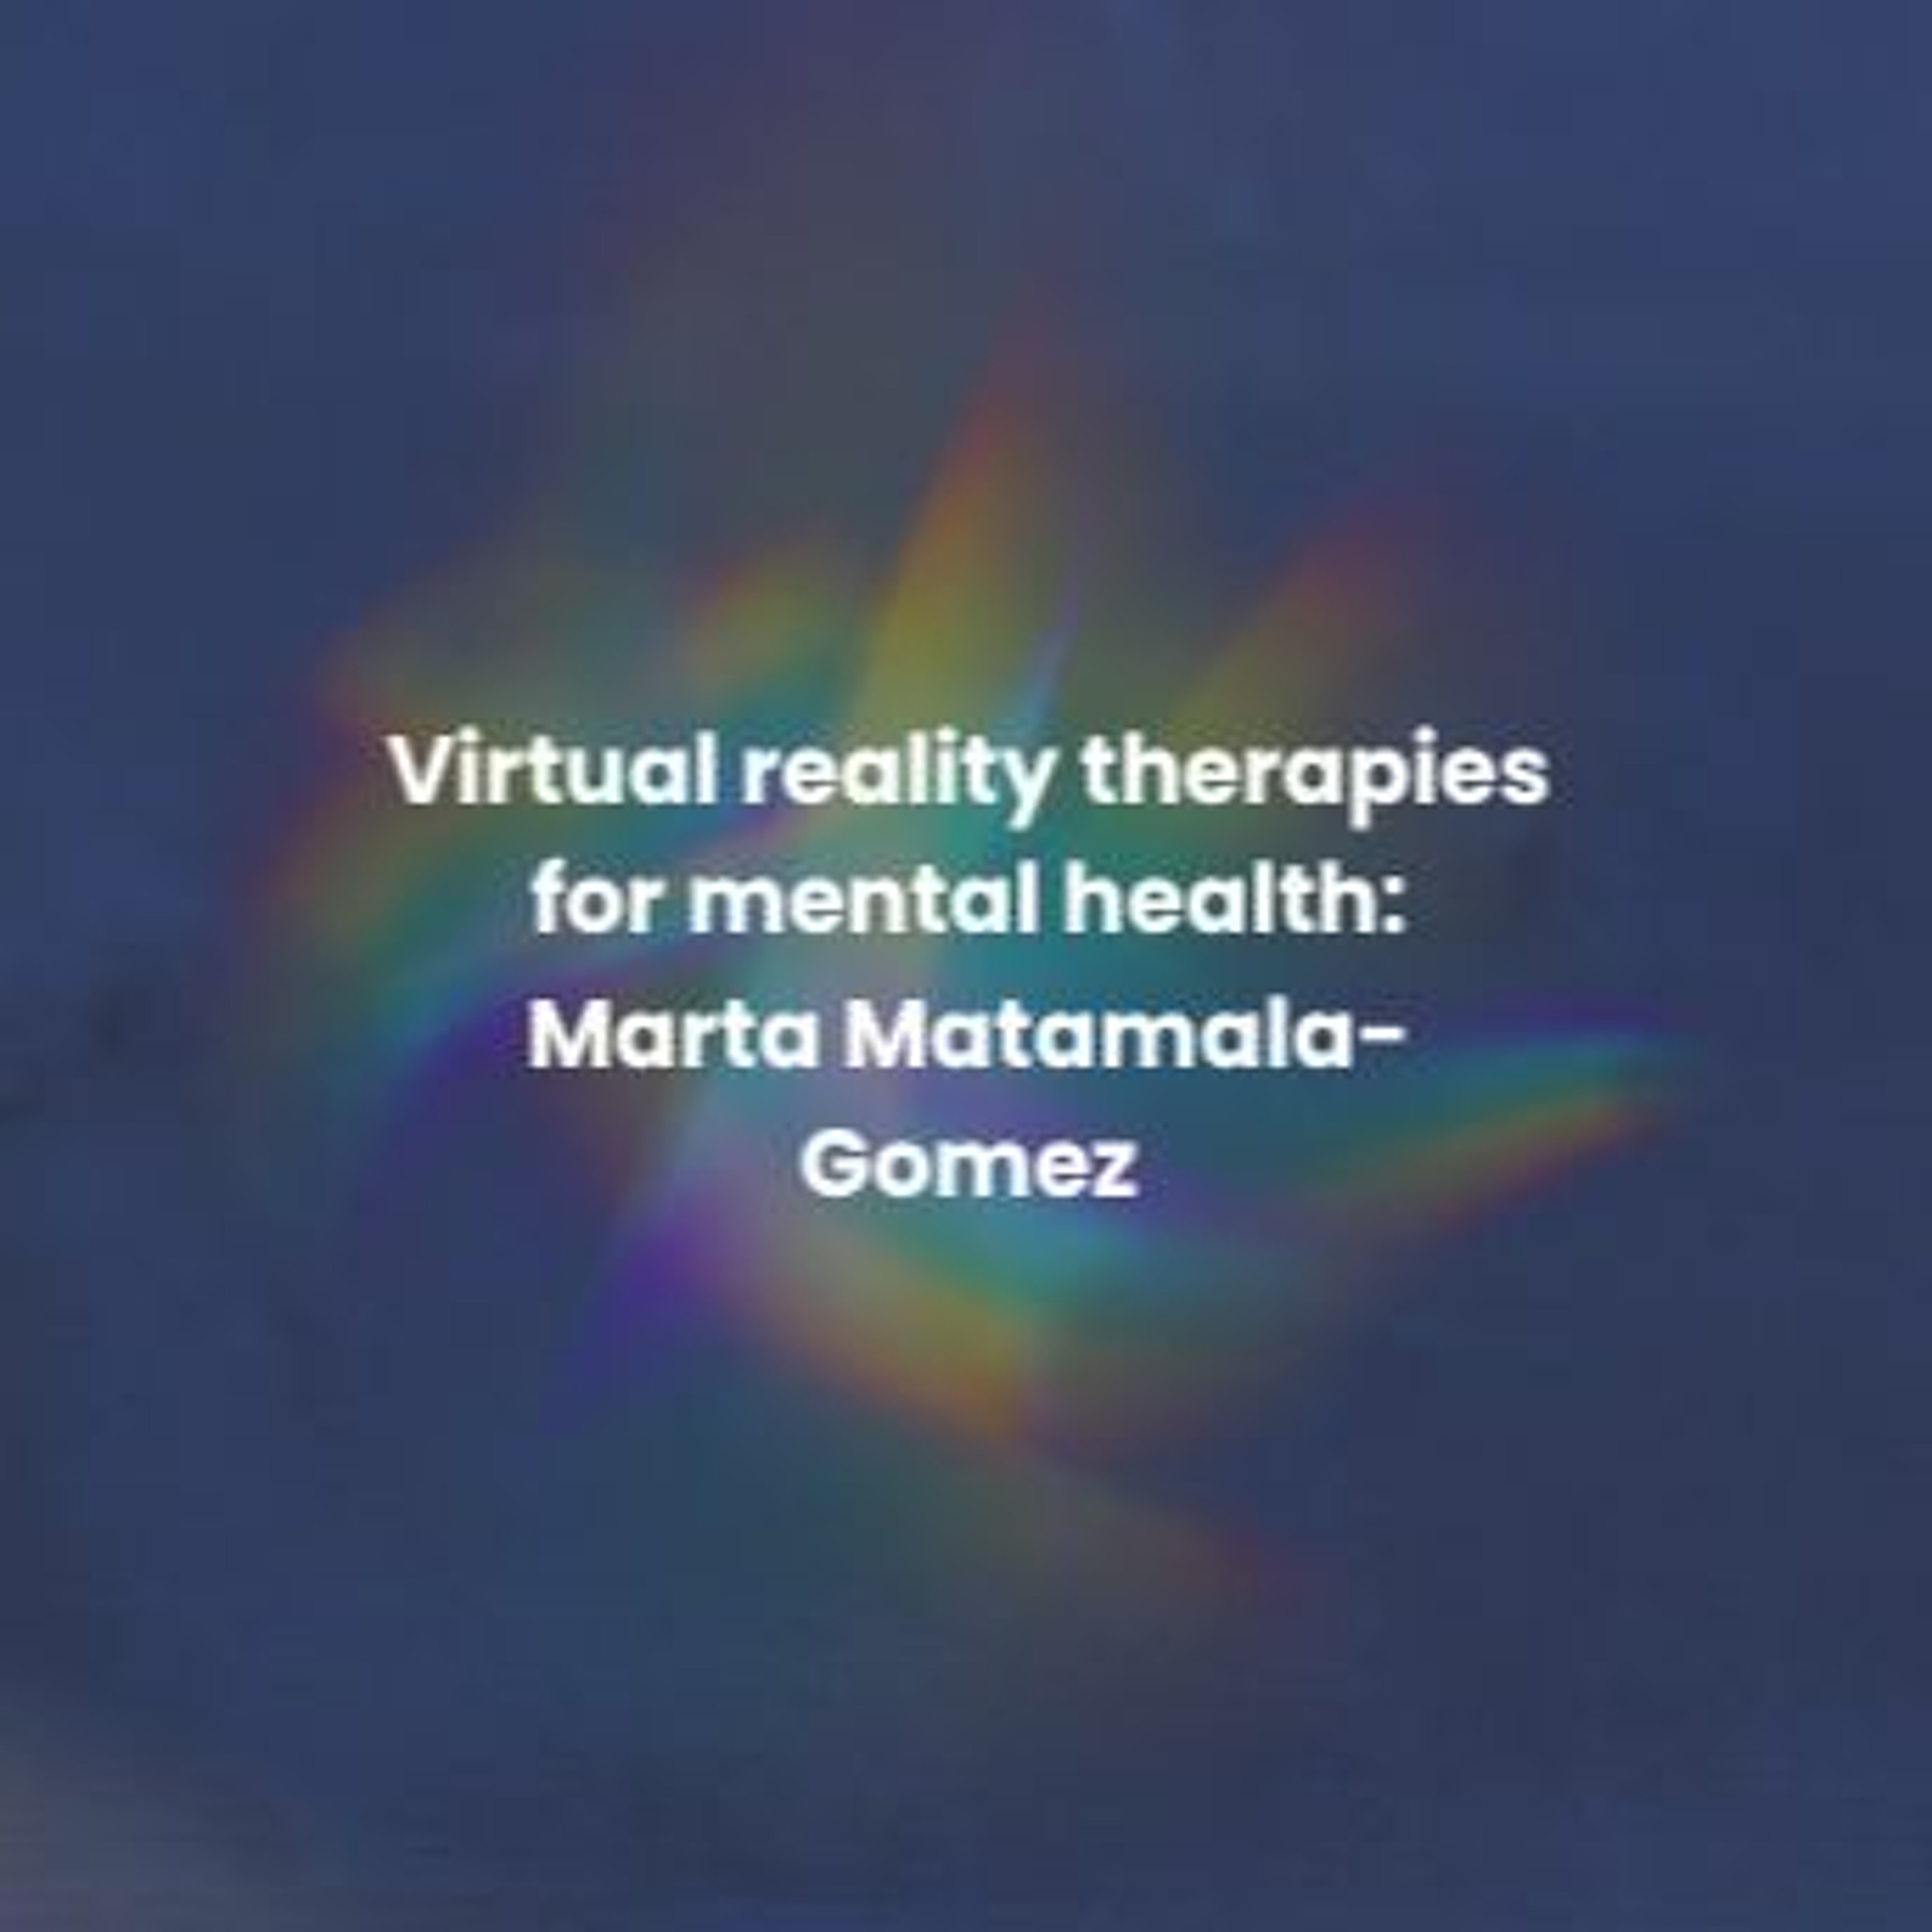 Virtual reality therapies for mental health: Marta Matamala-Gomez